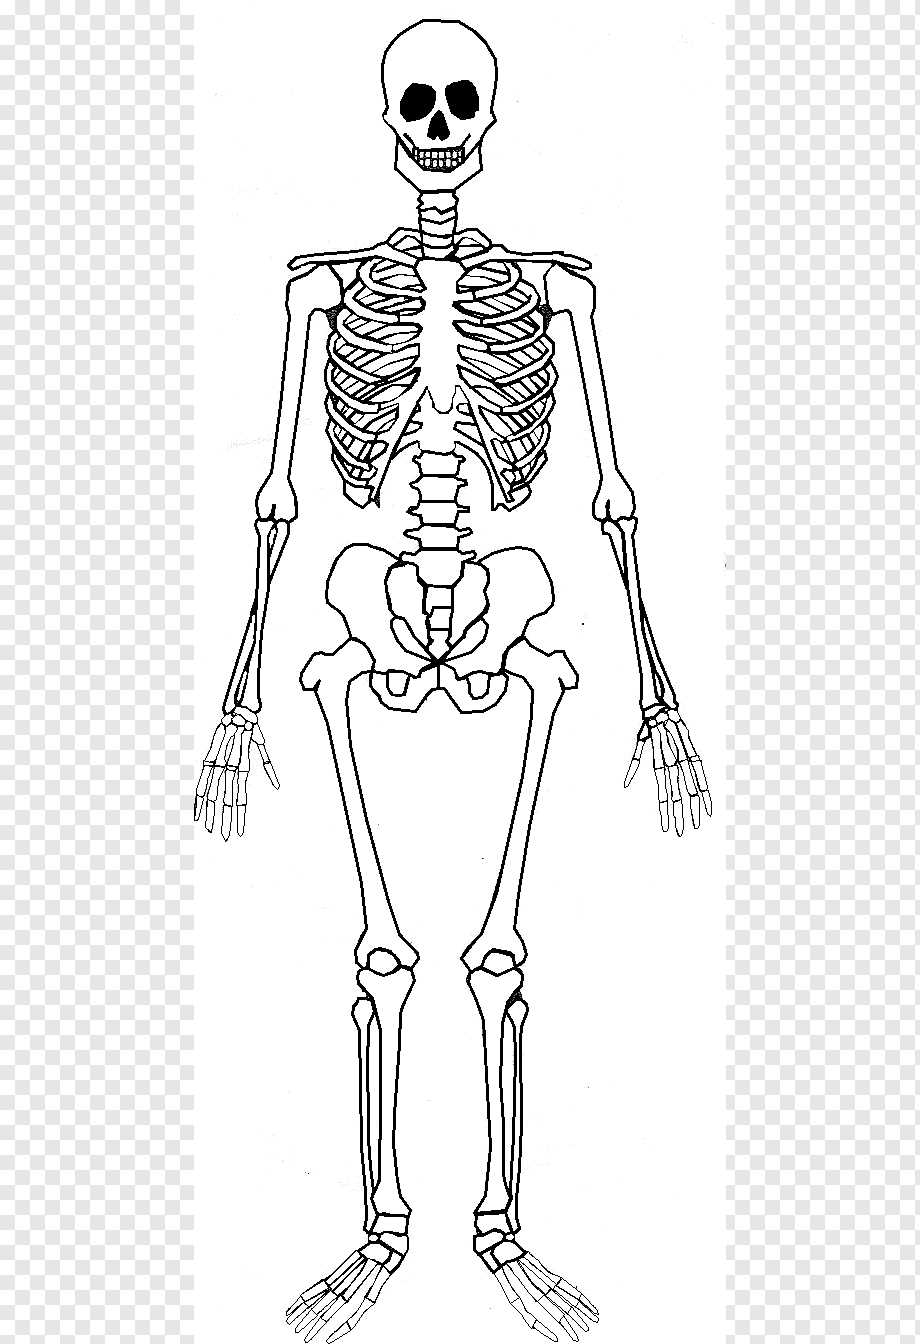 Скелет человека рисунок поэтапно